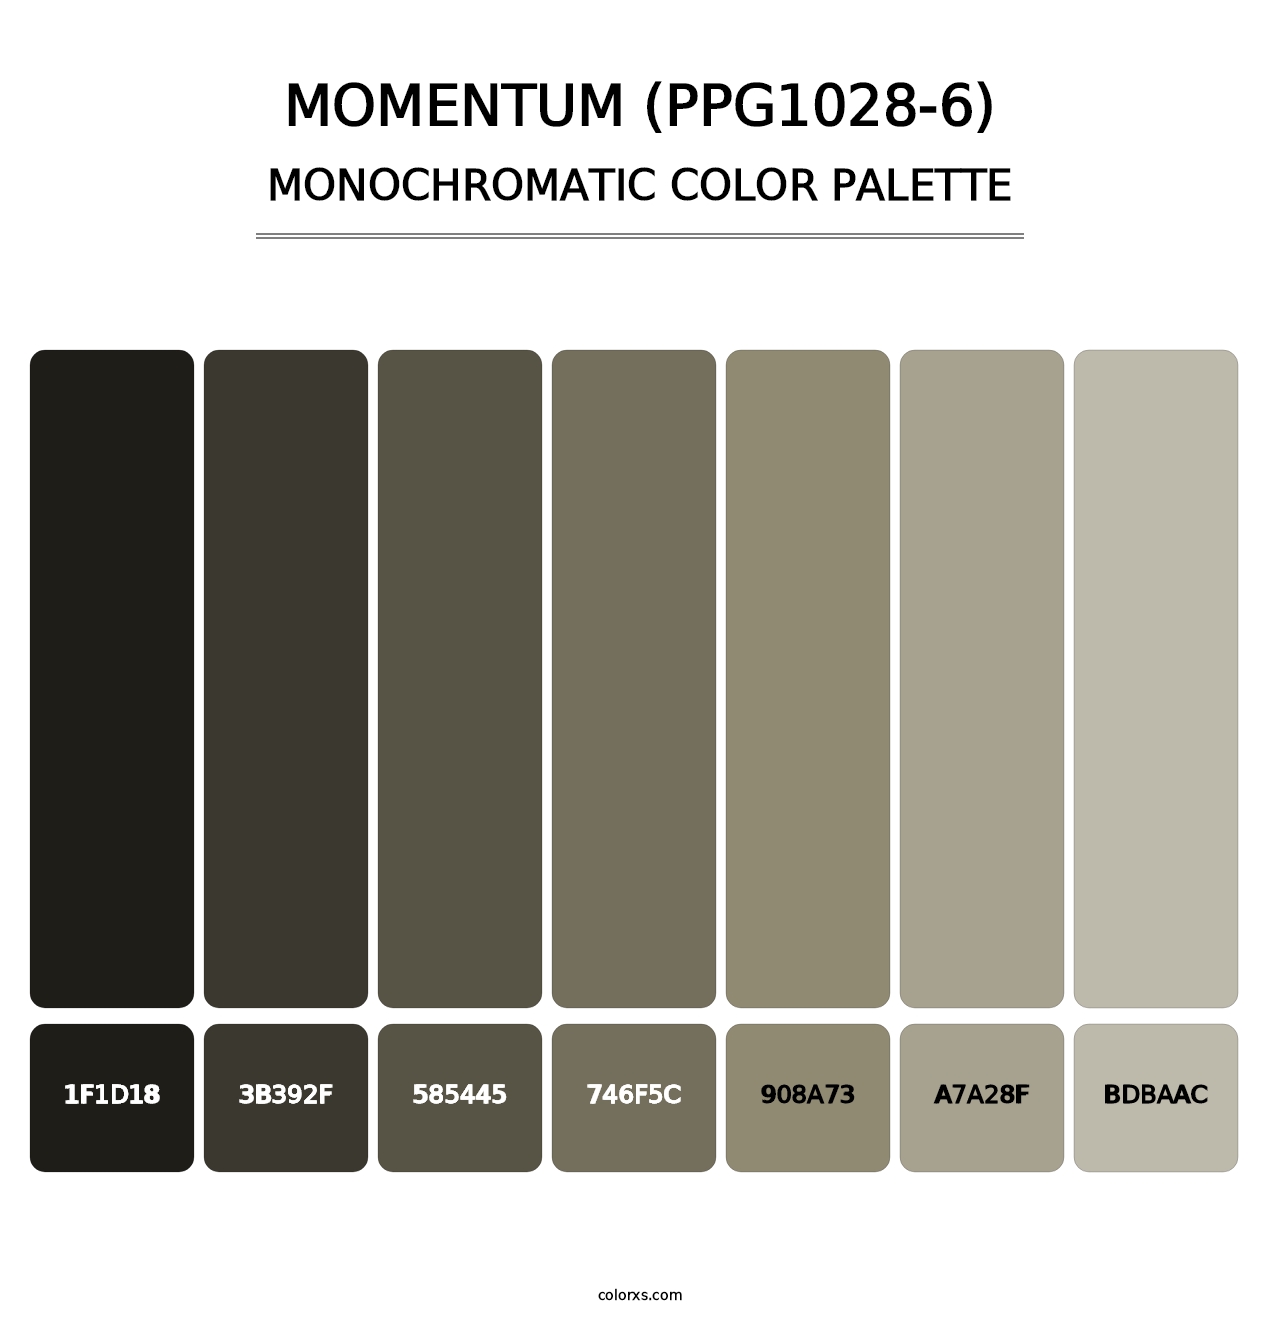 Momentum (PPG1028-6) - Monochromatic Color Palette